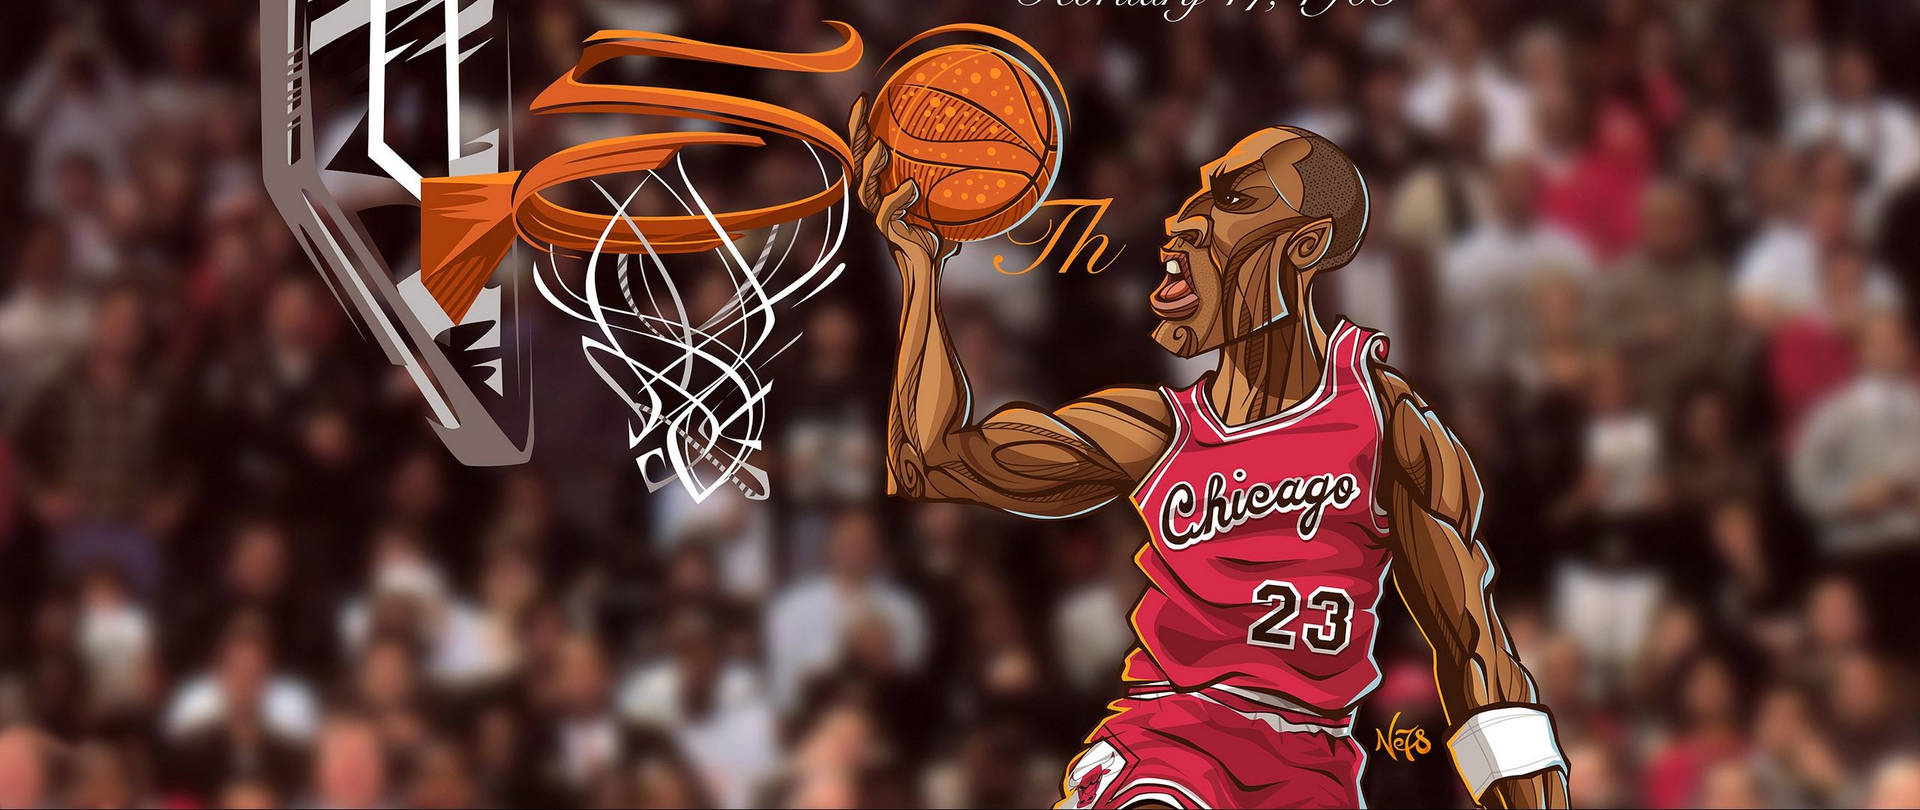 2560X1080 Michael Jordan Wallpaper and Background